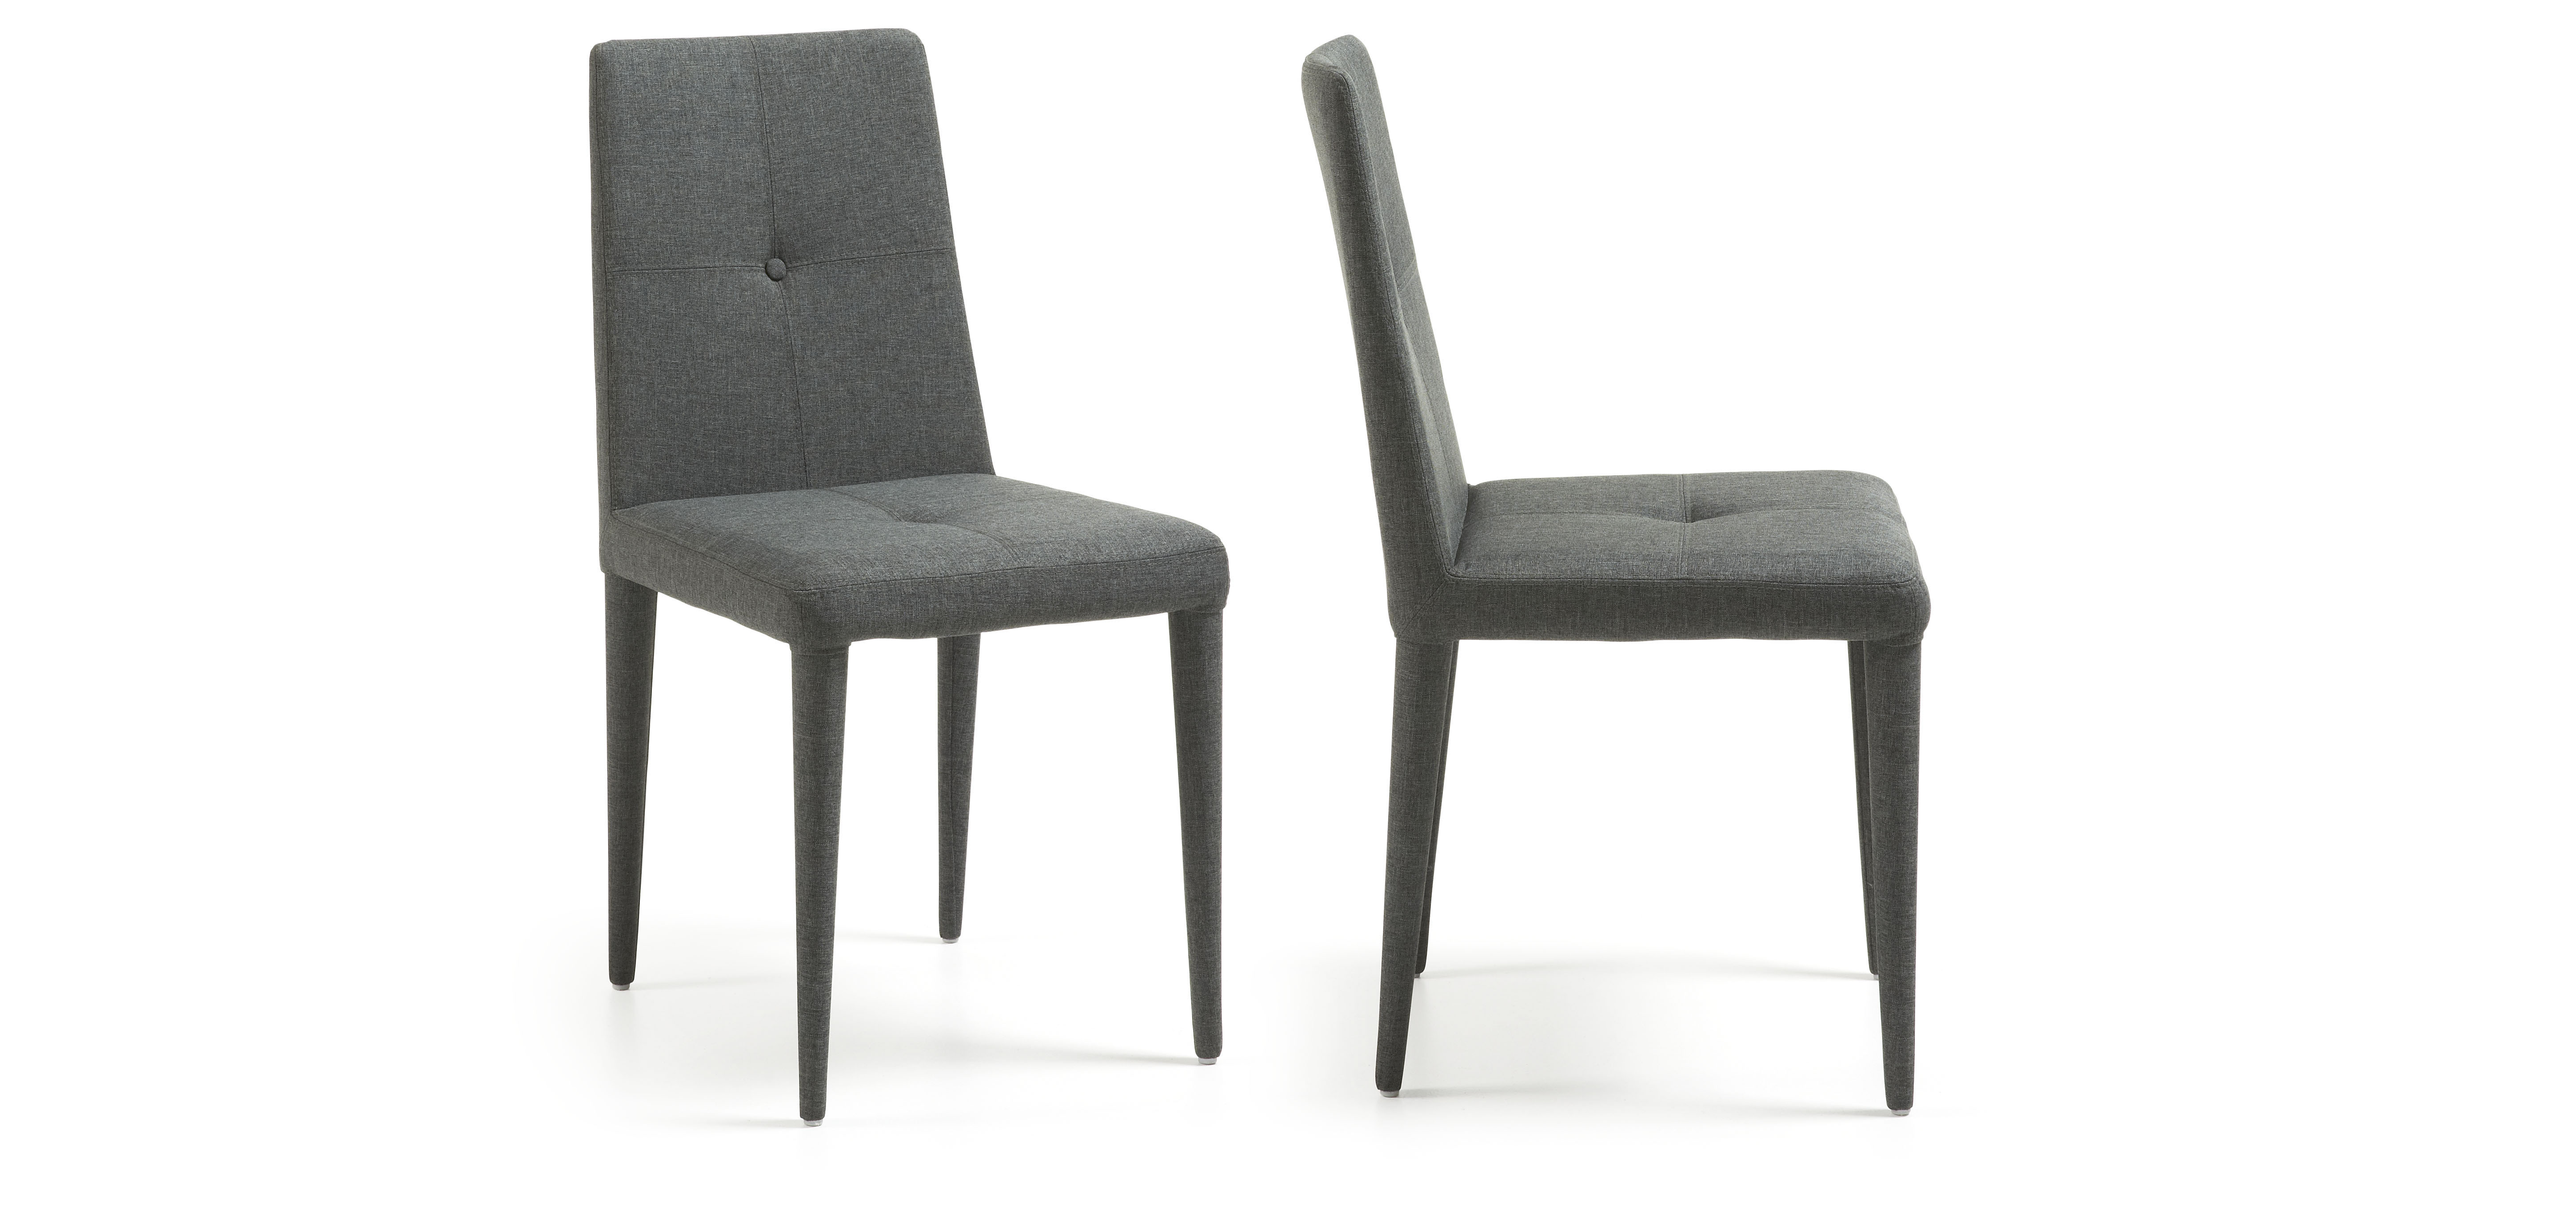 Dark Grey Upholstered High Back Dining Chair Footprint